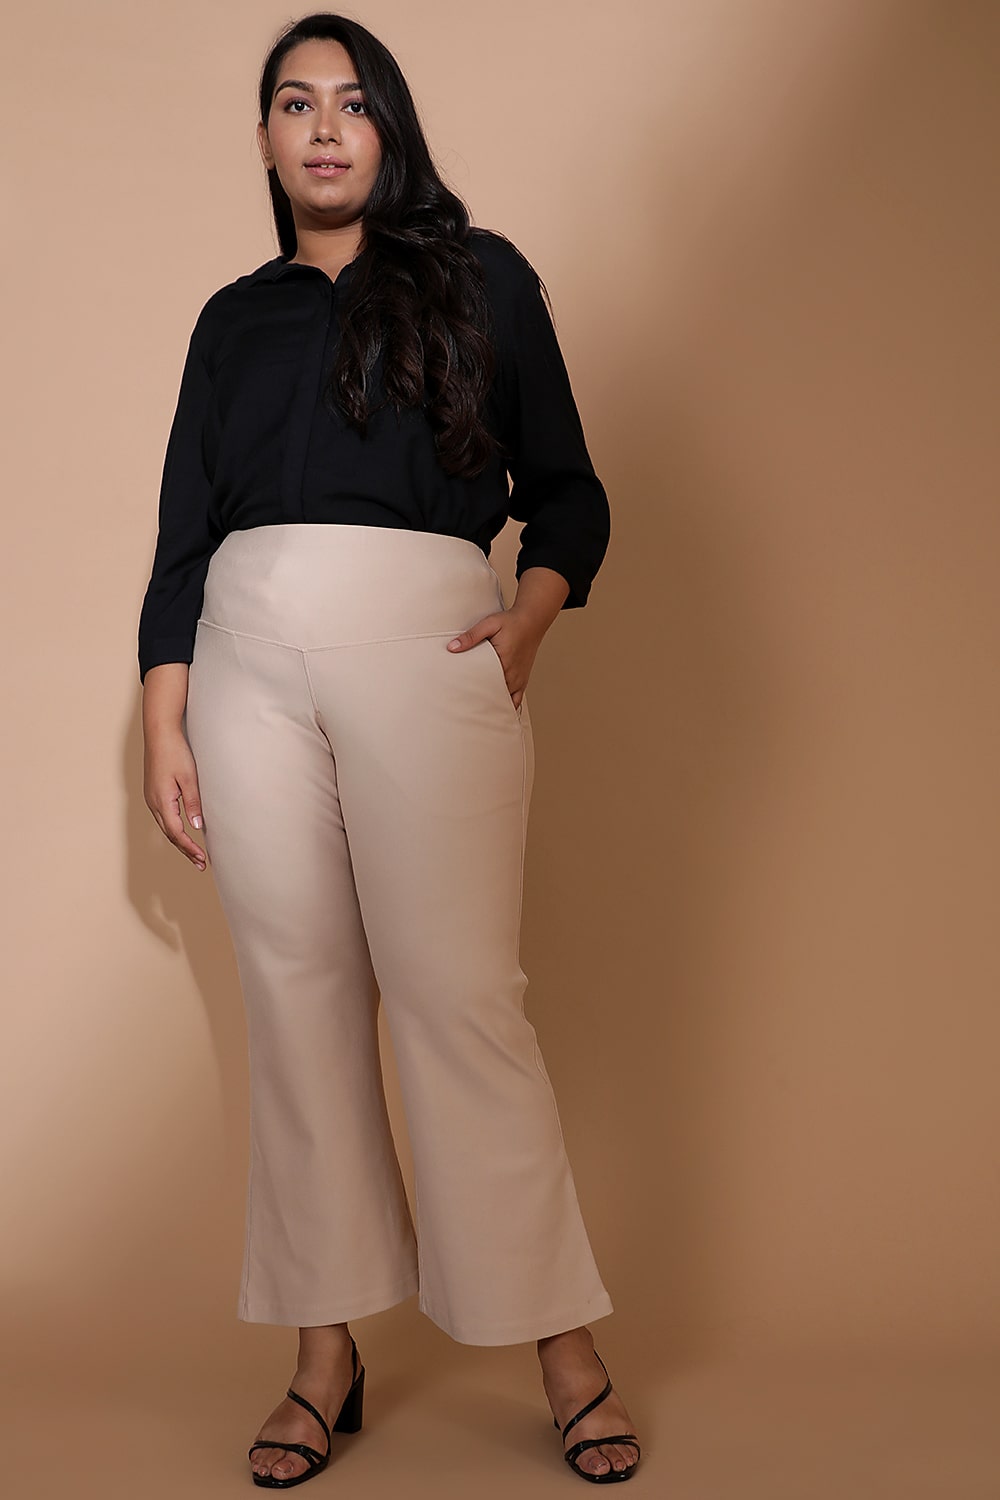 SHEIN Fold Pleated Tailor Pants | Elegant pants outfit, Brown pants outfit,  Tailored pants outfit